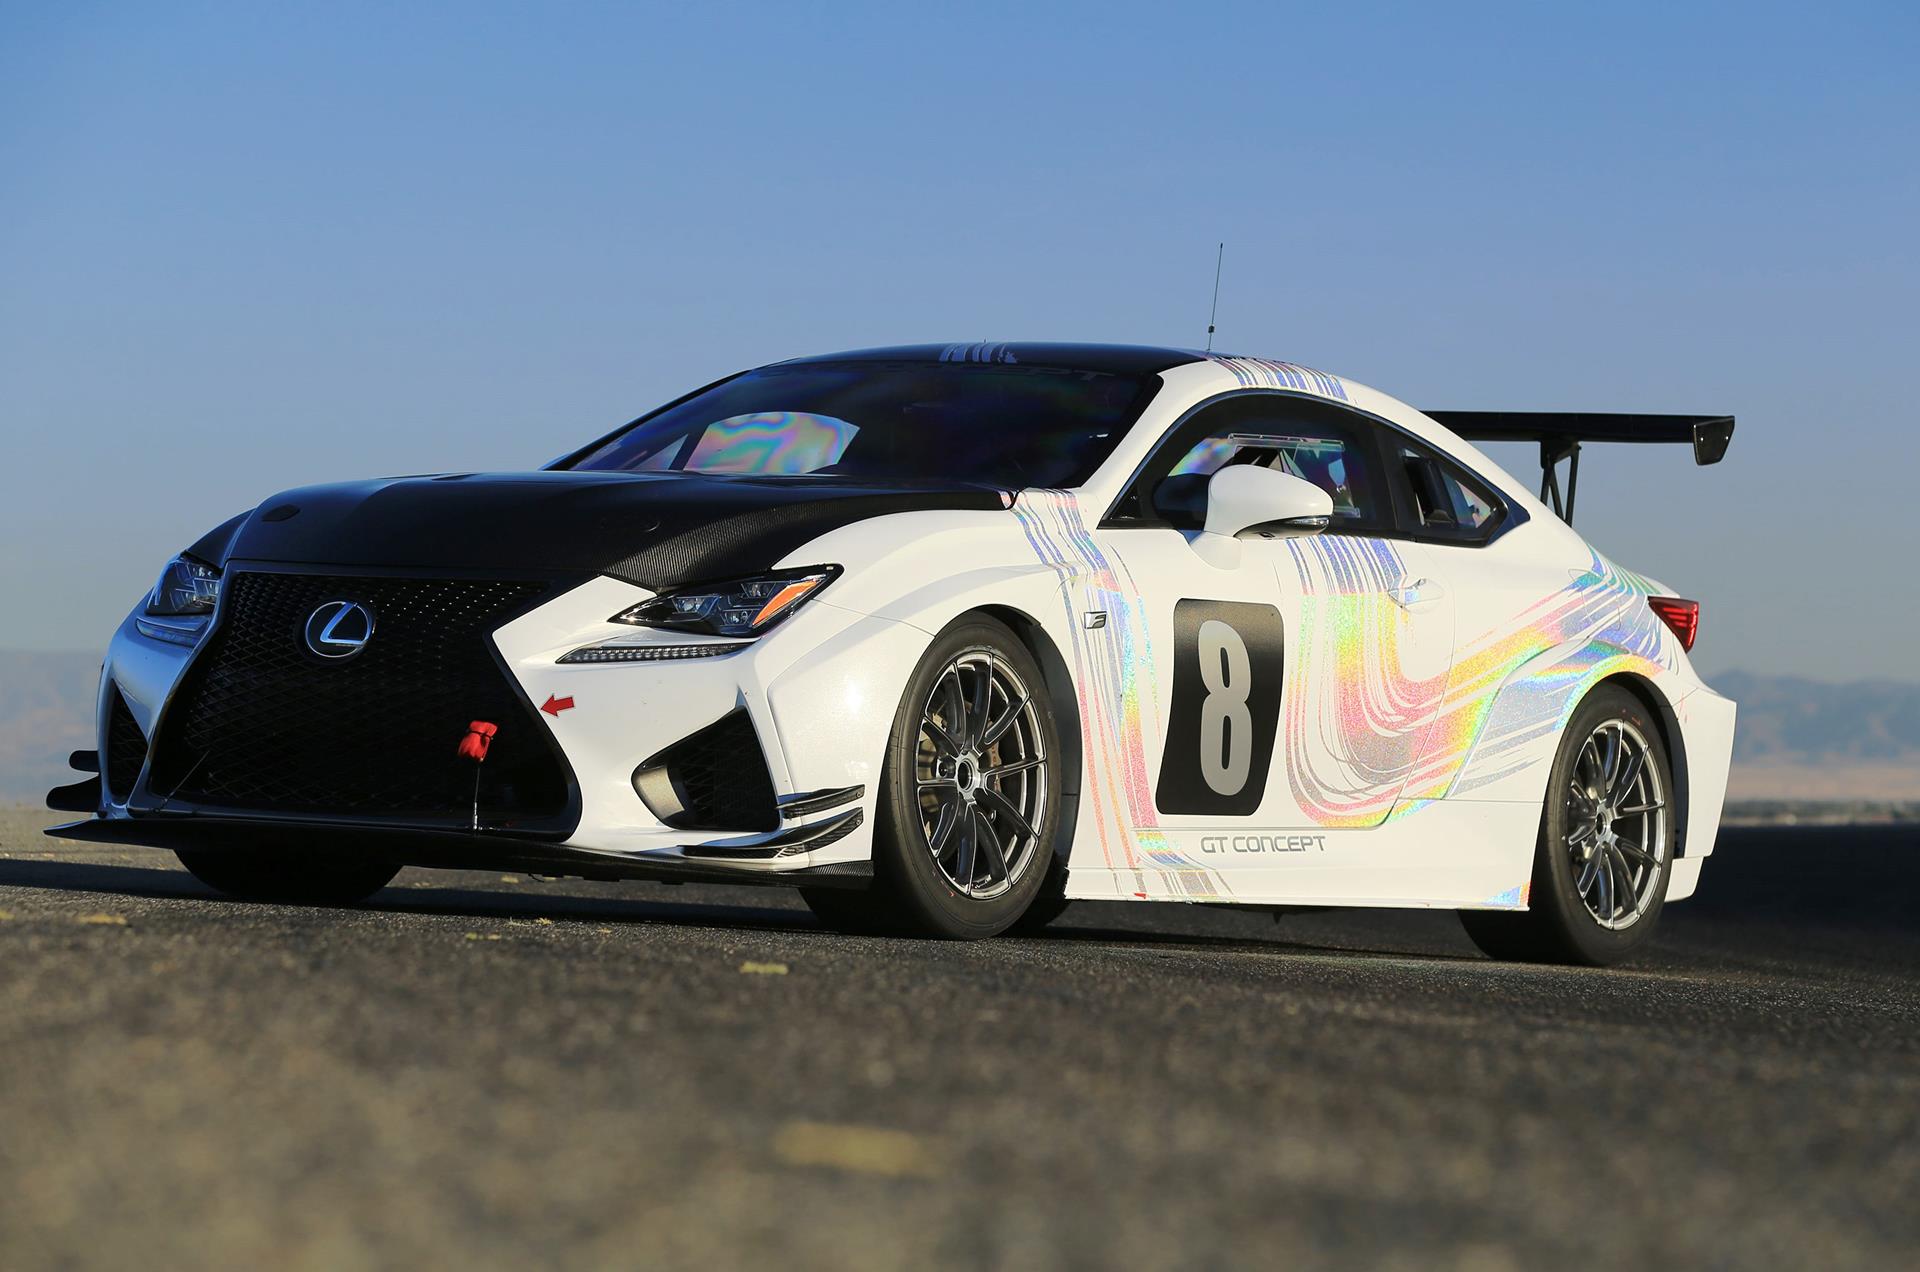 2015 Lexus RC F GT Concept